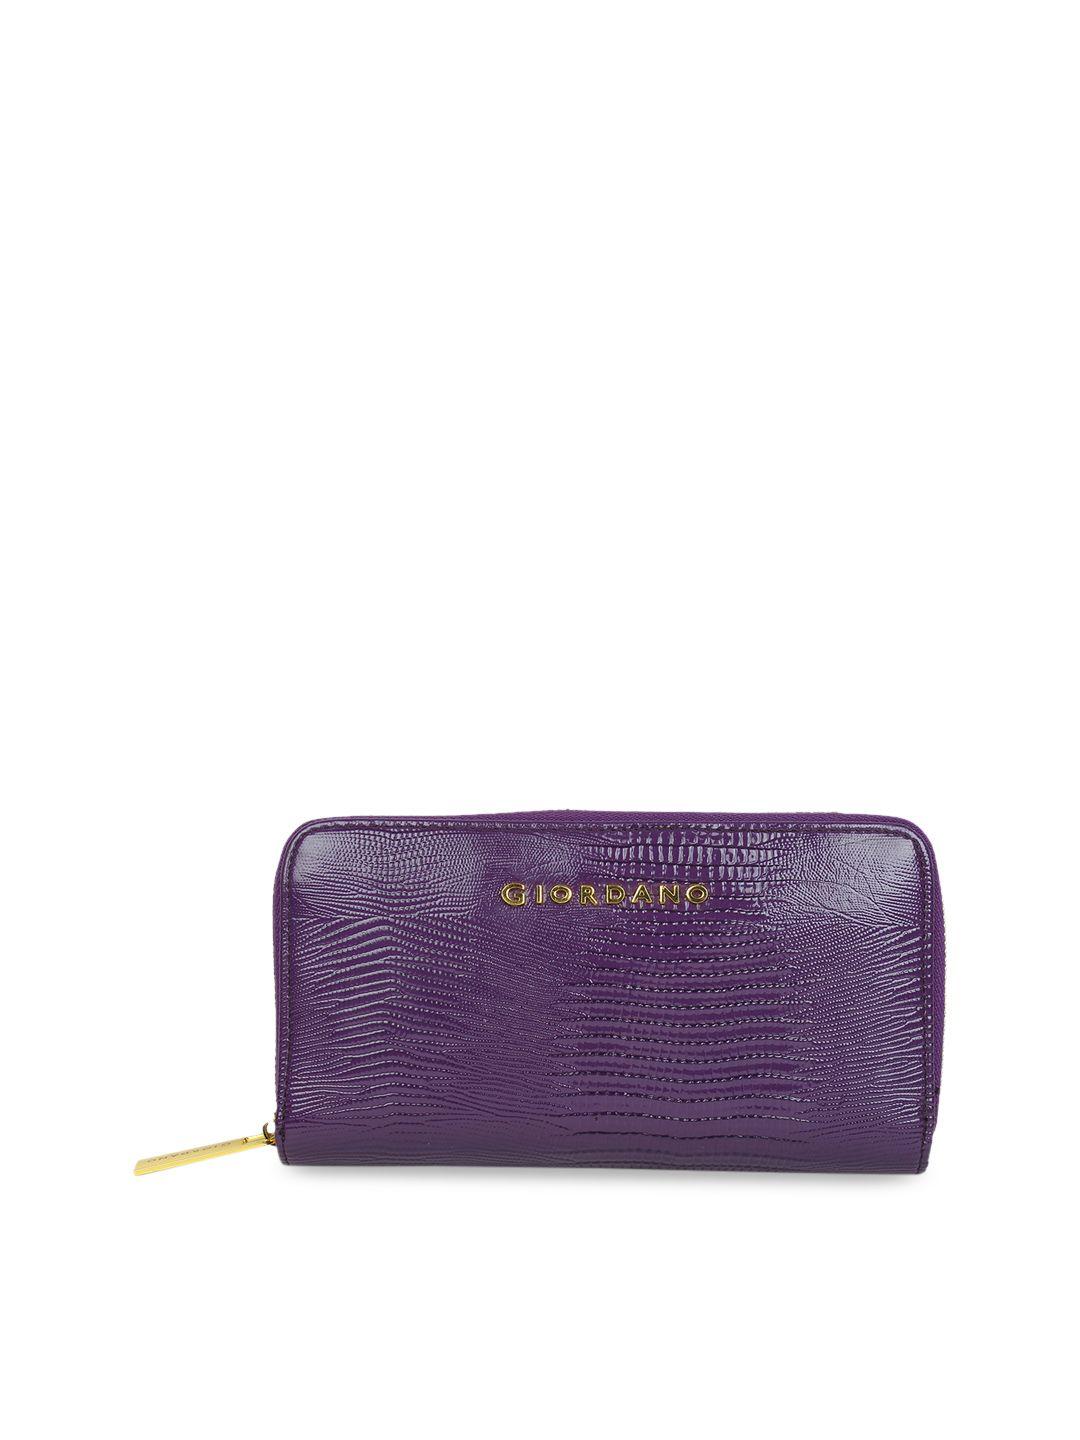 giordano purple textured purse clutches